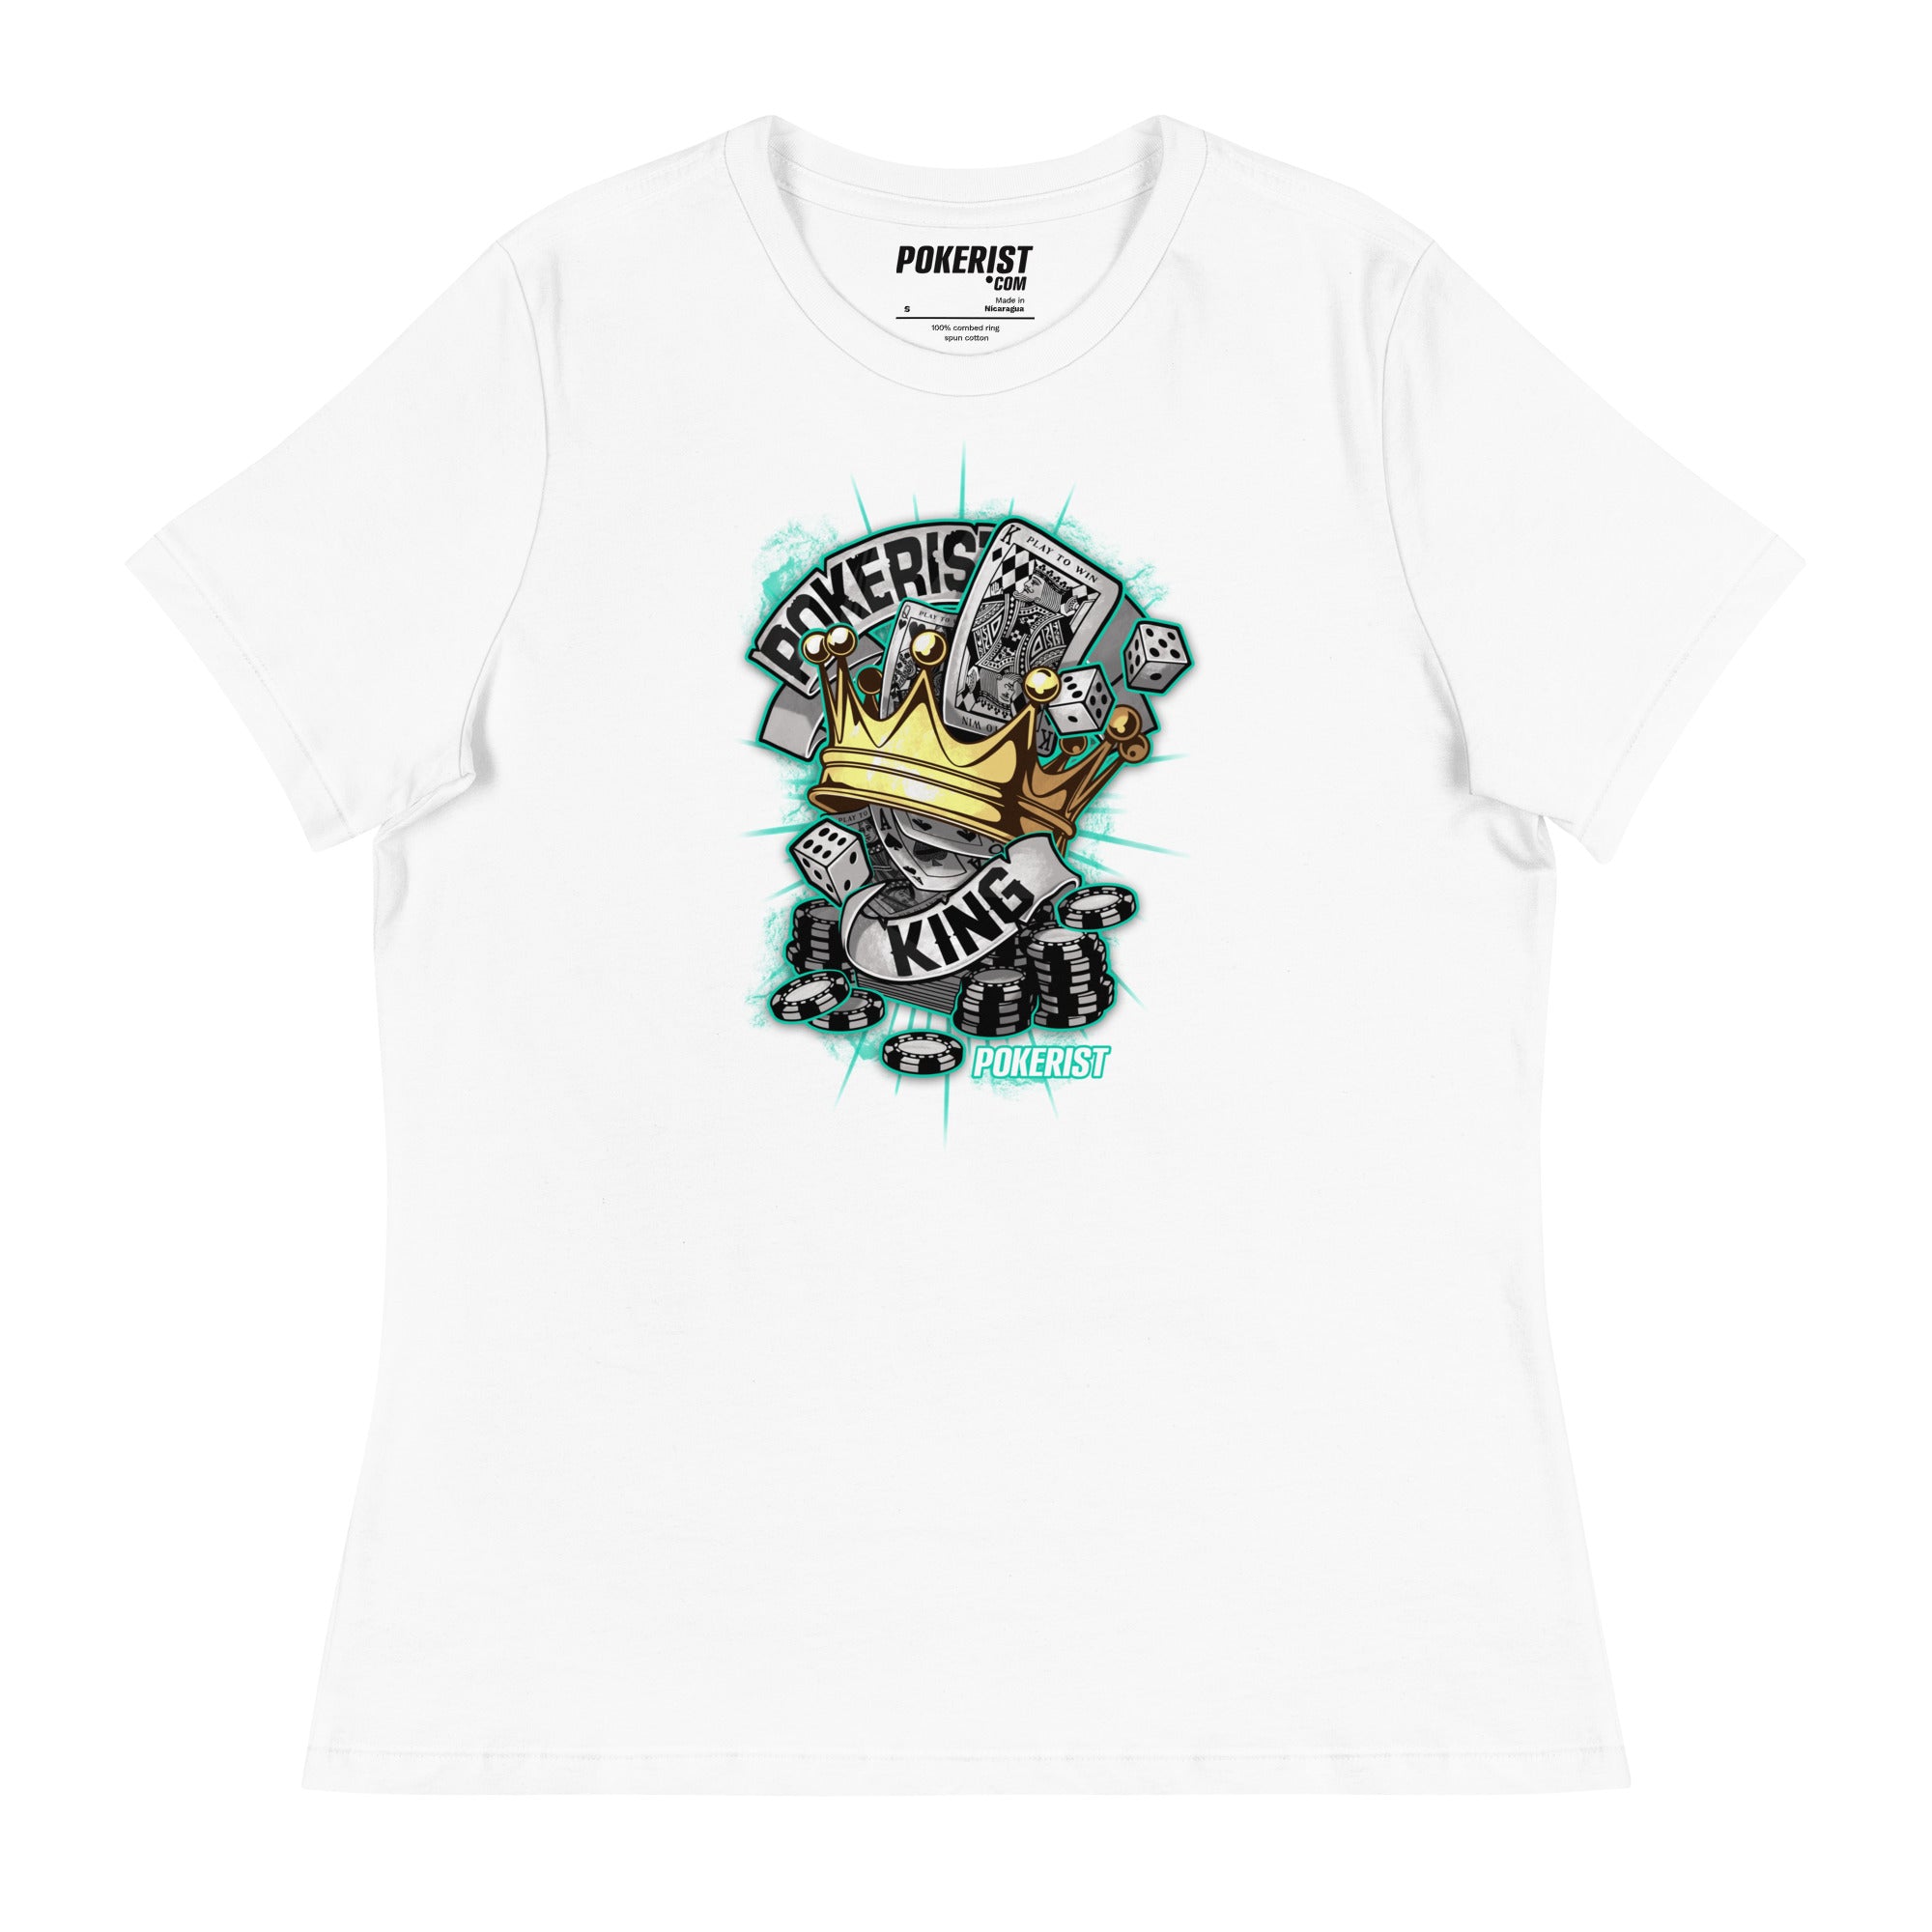 Pokerist King - Women's Relaxed T-Shirt